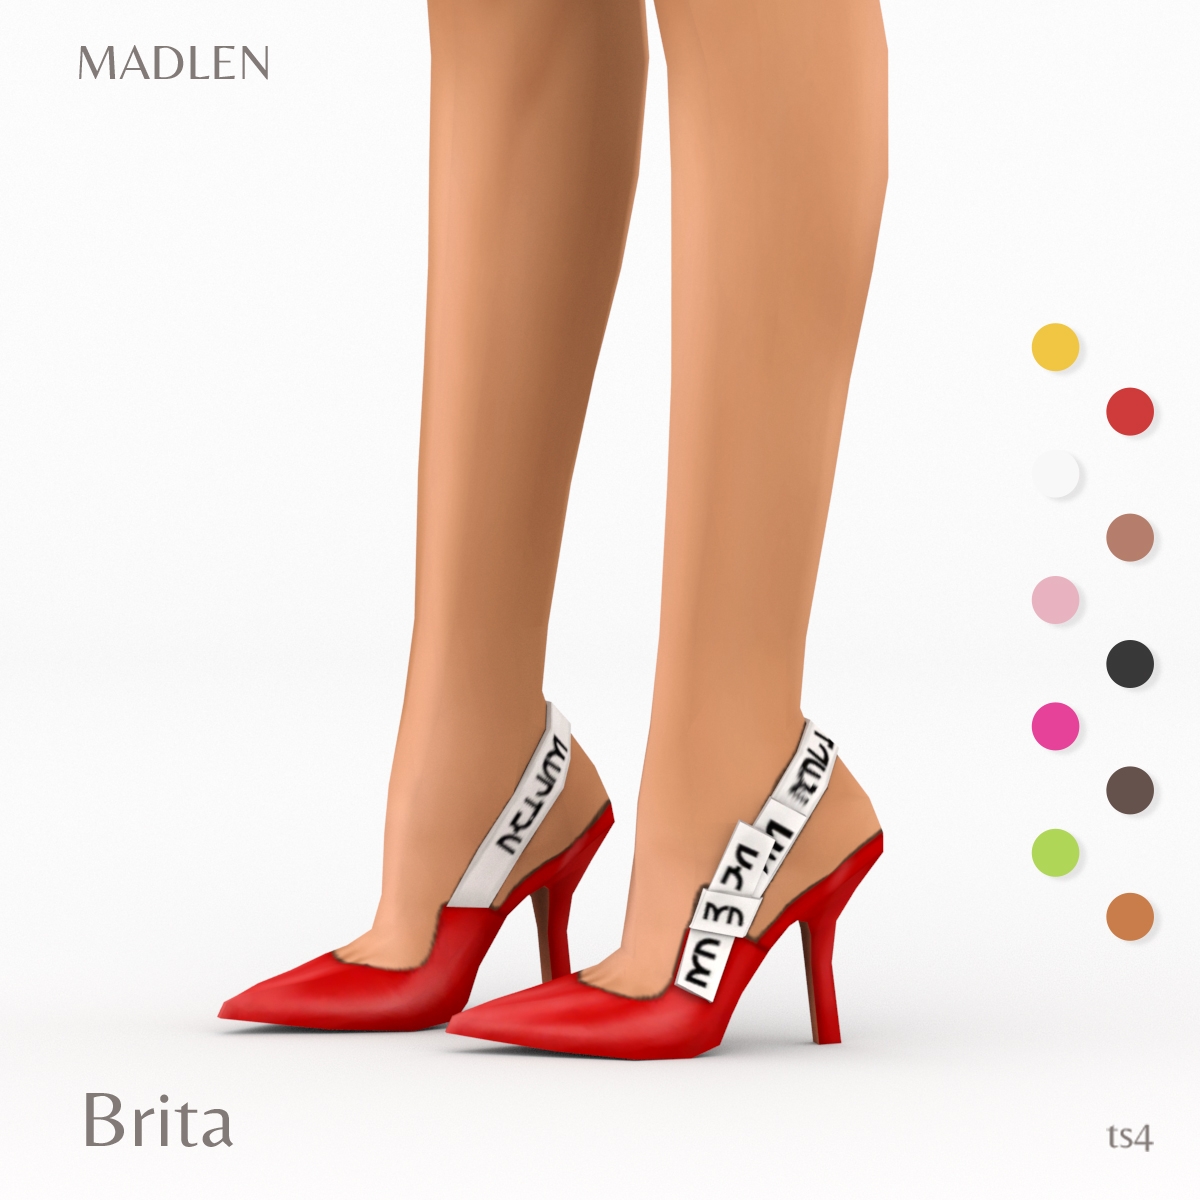 Brita Shoes